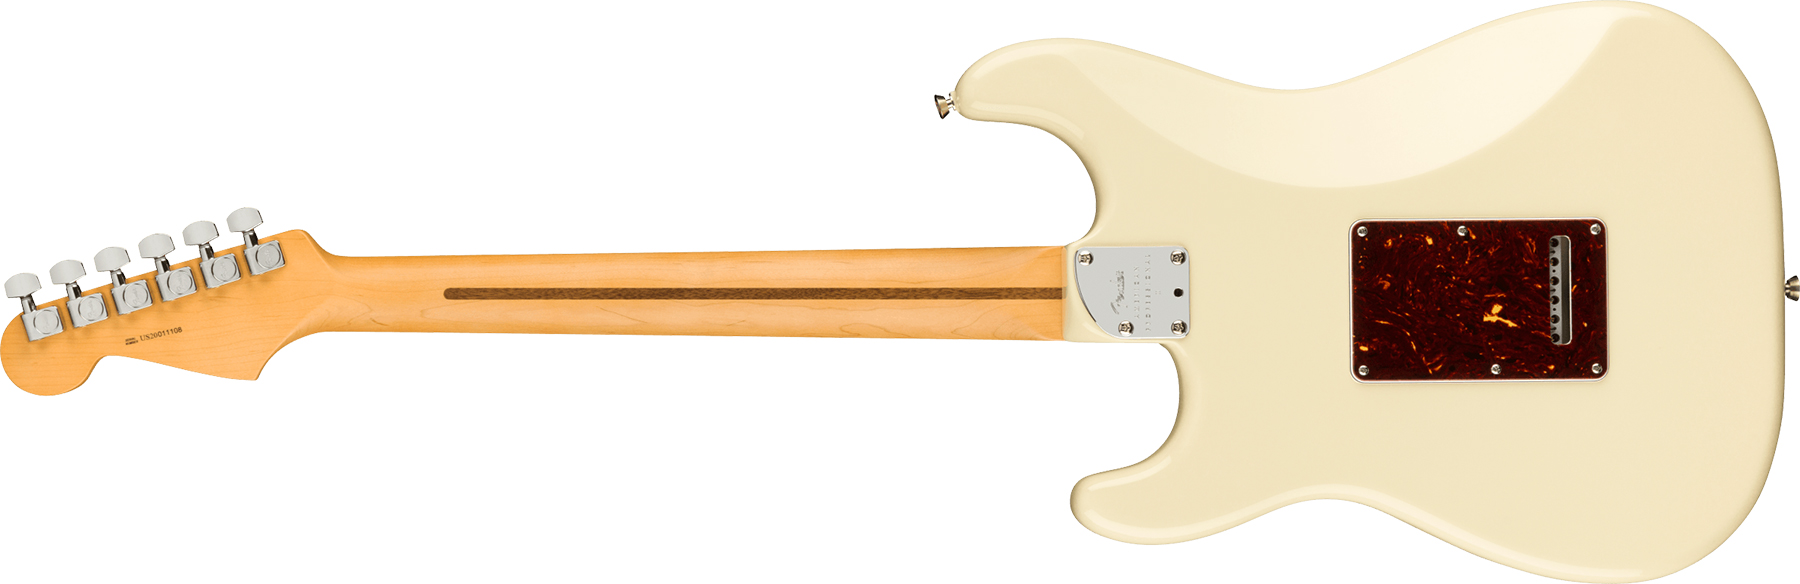 Fender Strat American Professional Ii Usa Rw - Olympic White - Guitarra eléctrica con forma de str. - Variation 1